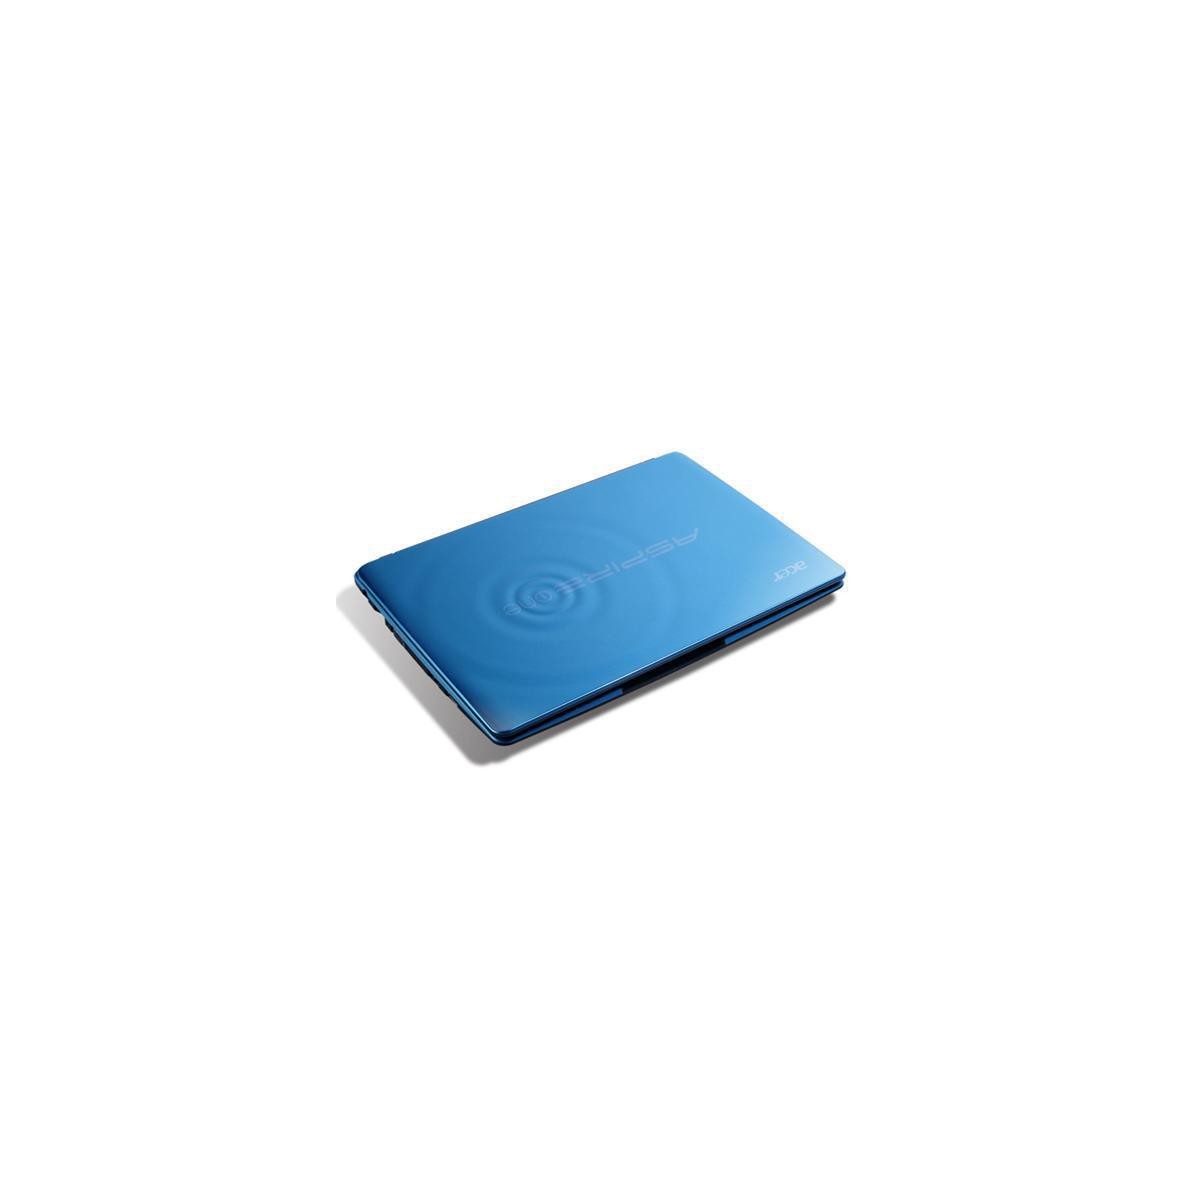 Intel Acer Aspire One 722-0667 - AMD Dual-Core - 1 GHz - 29.5 cm (11.6") - 1366 x 768 pixels - 2 GB - 320 GB